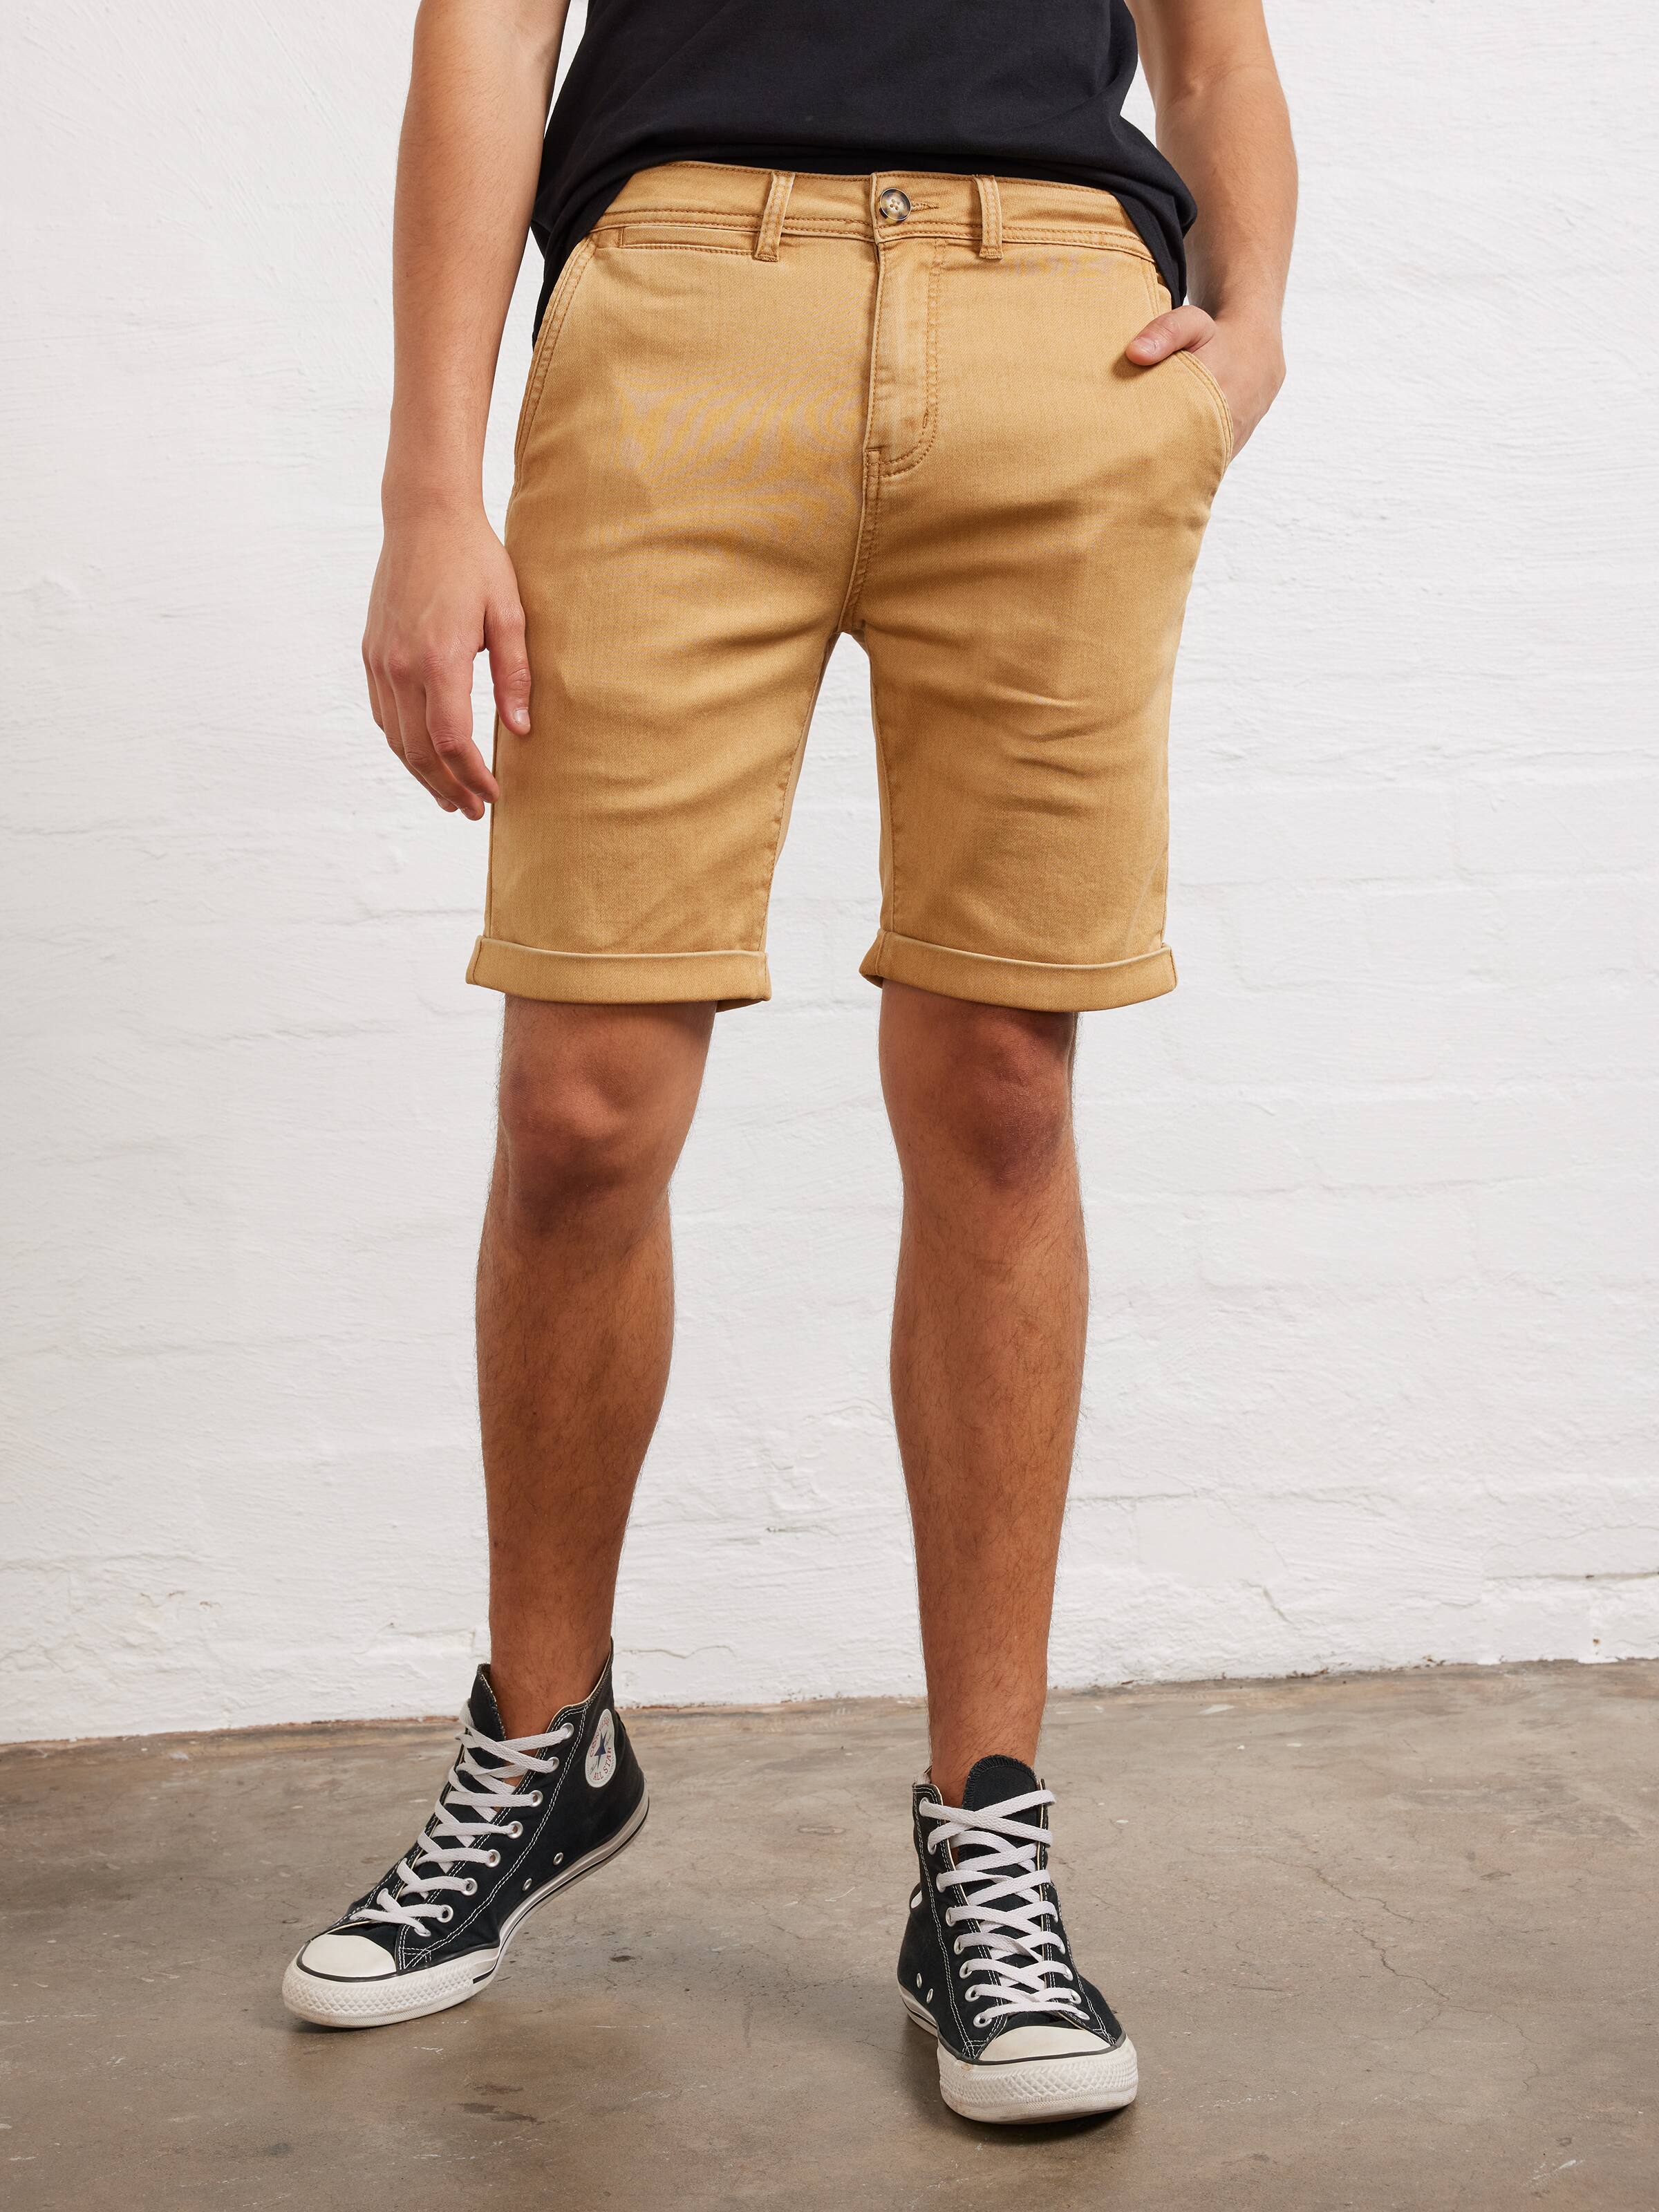 Guys Shorts - Chino Shorts, Denim Shorts & Board Shorts